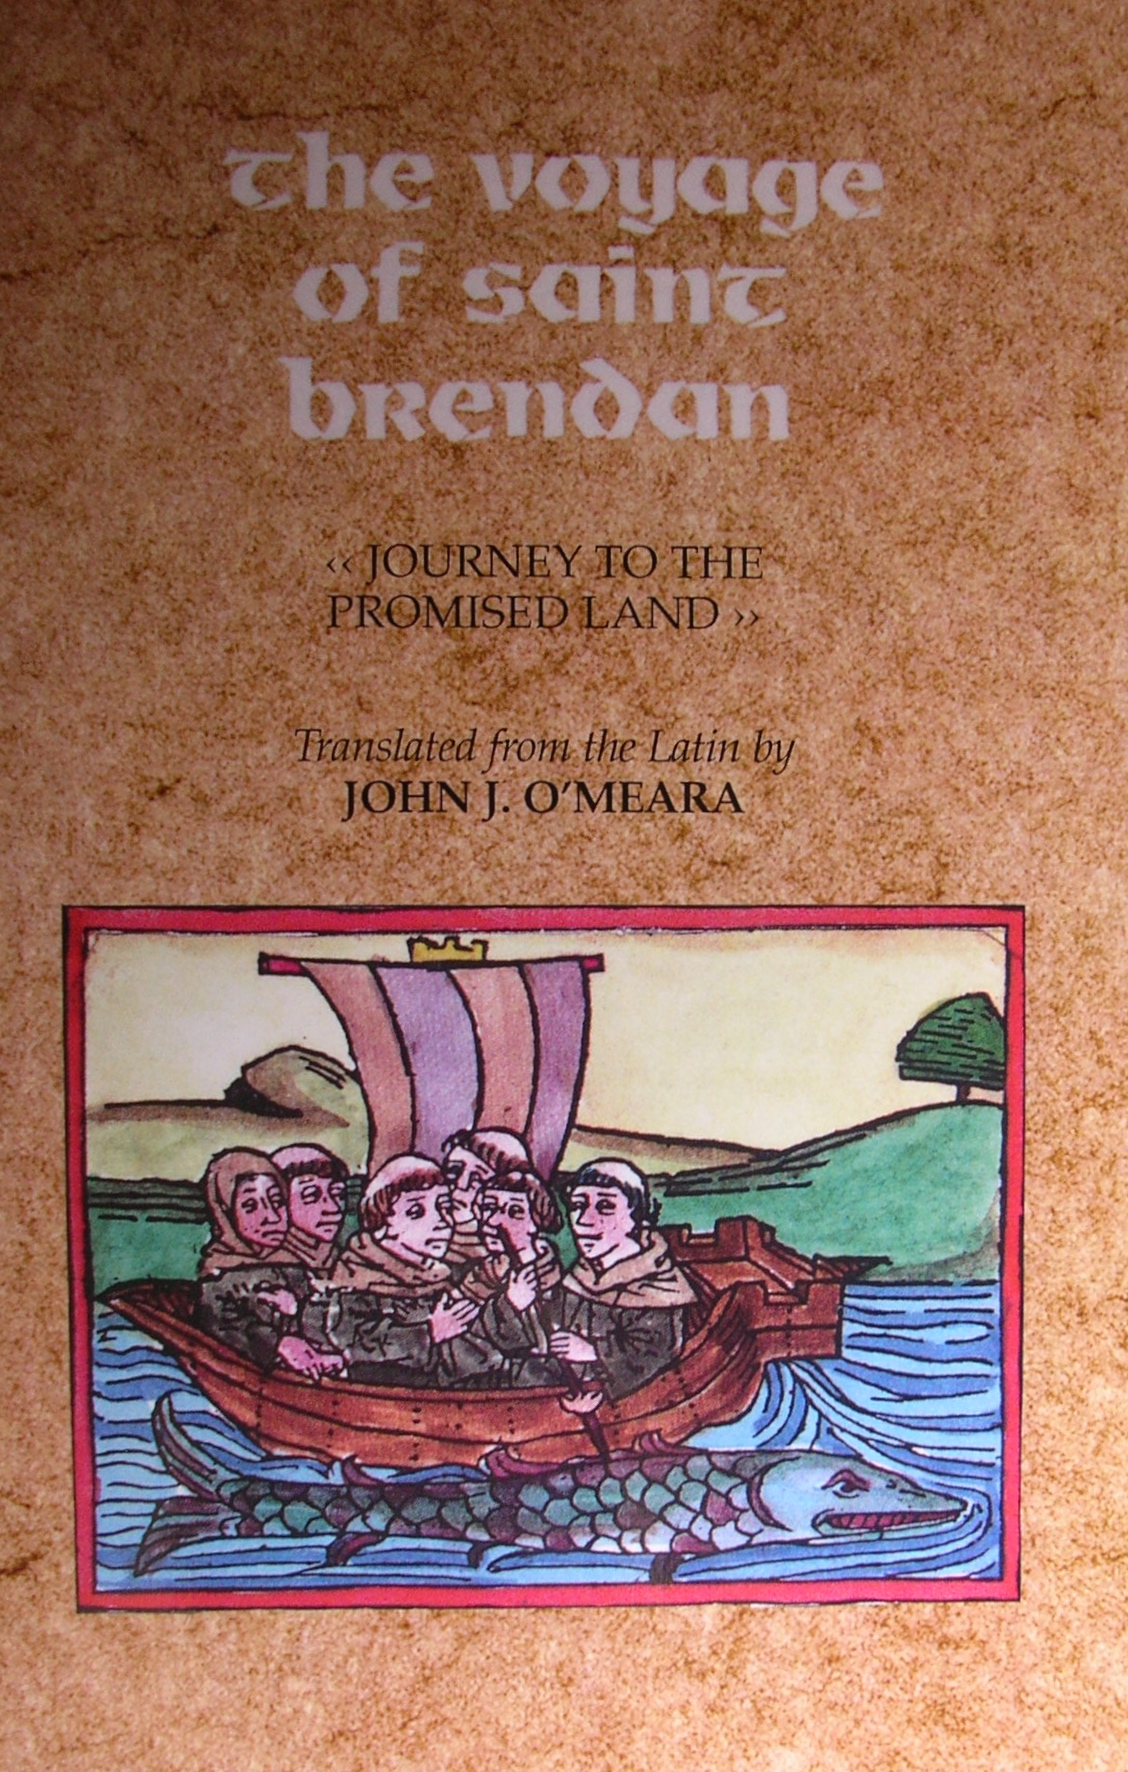 who wrote st brendan's voyage